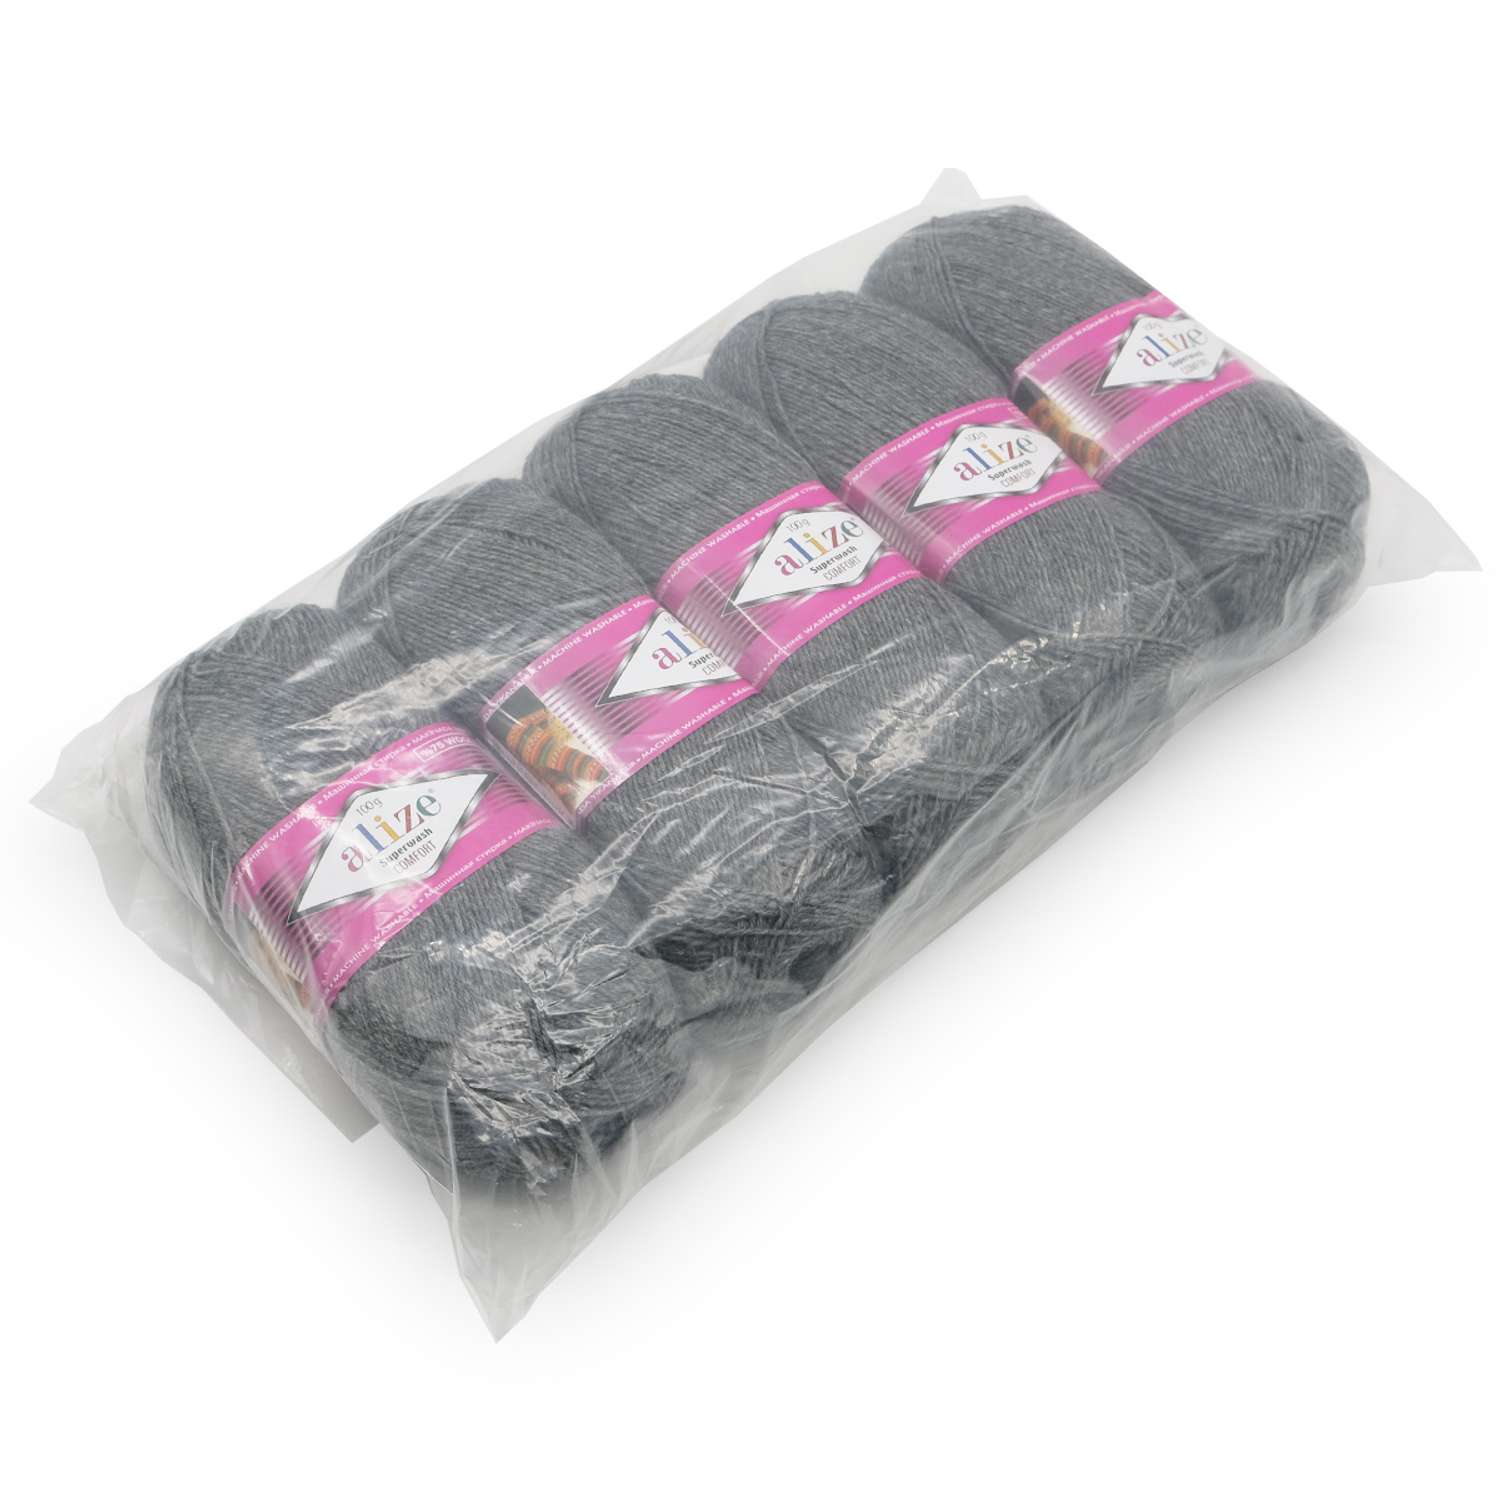 Пряжа Alize для вязания носков Superwash Comfort Socks 100 гр 420 м 5 мотков 182 темно-серый меланж - фото 9